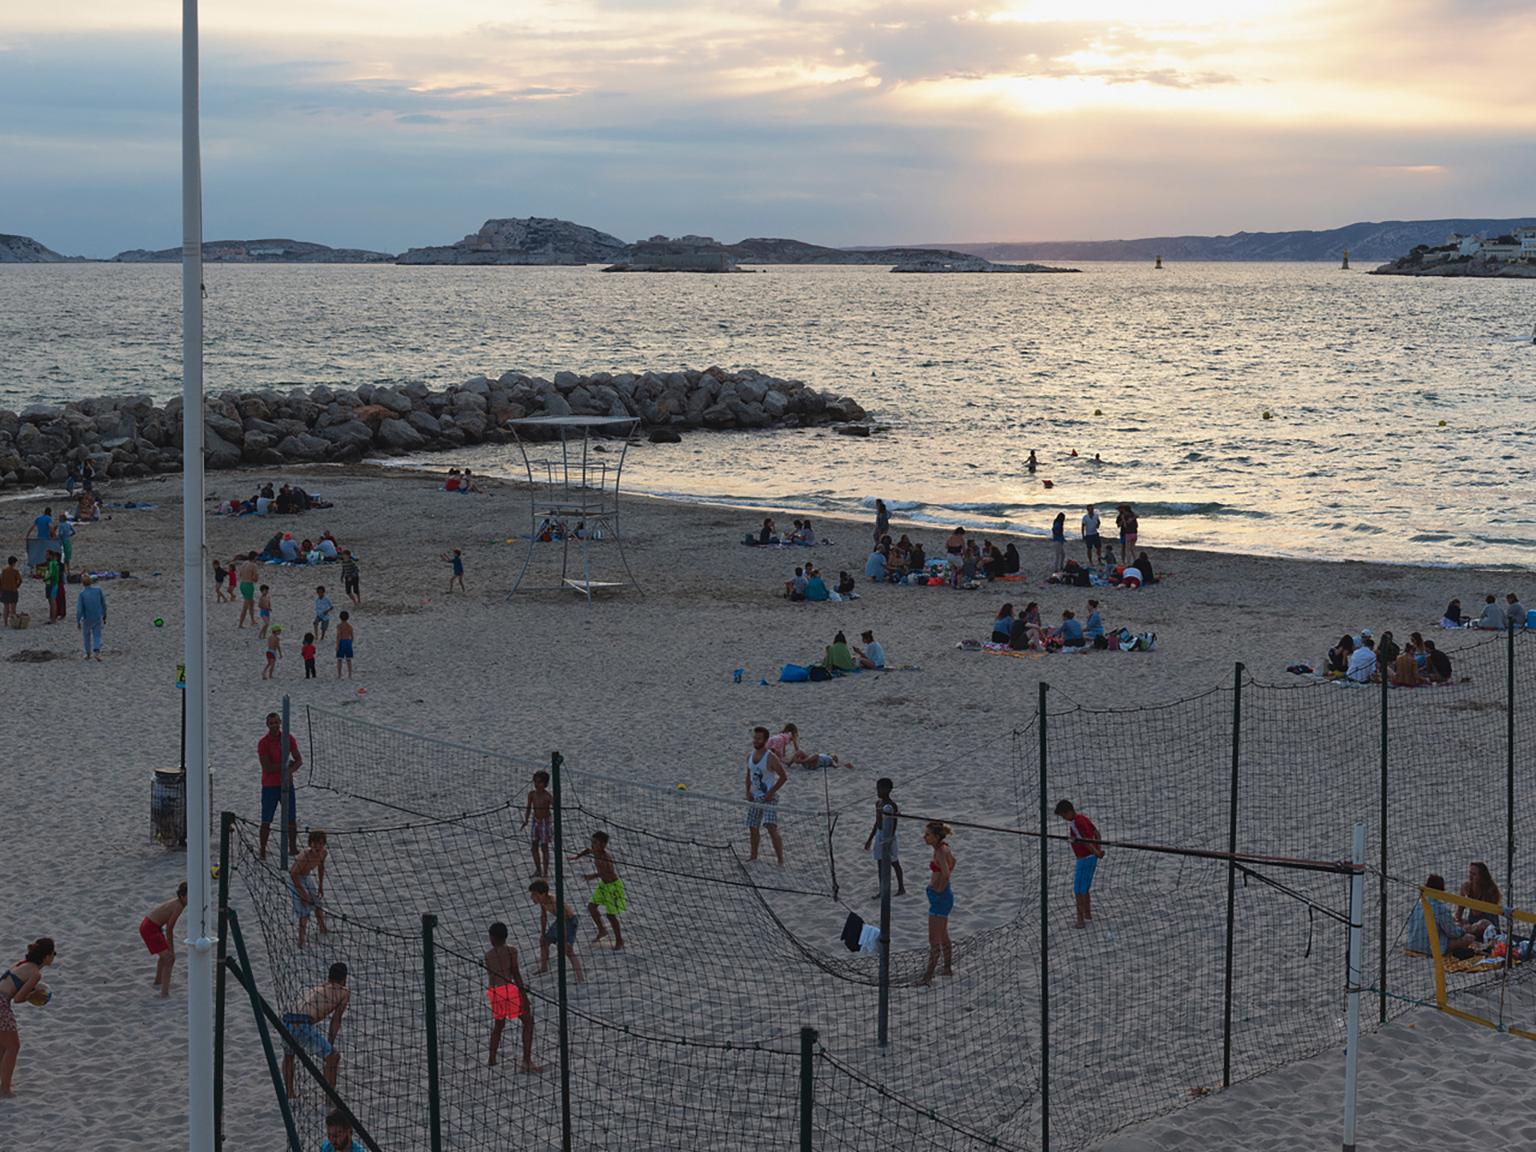 Plage du Prophete Evening (framed) - large scale photo of Mediterranean beach 